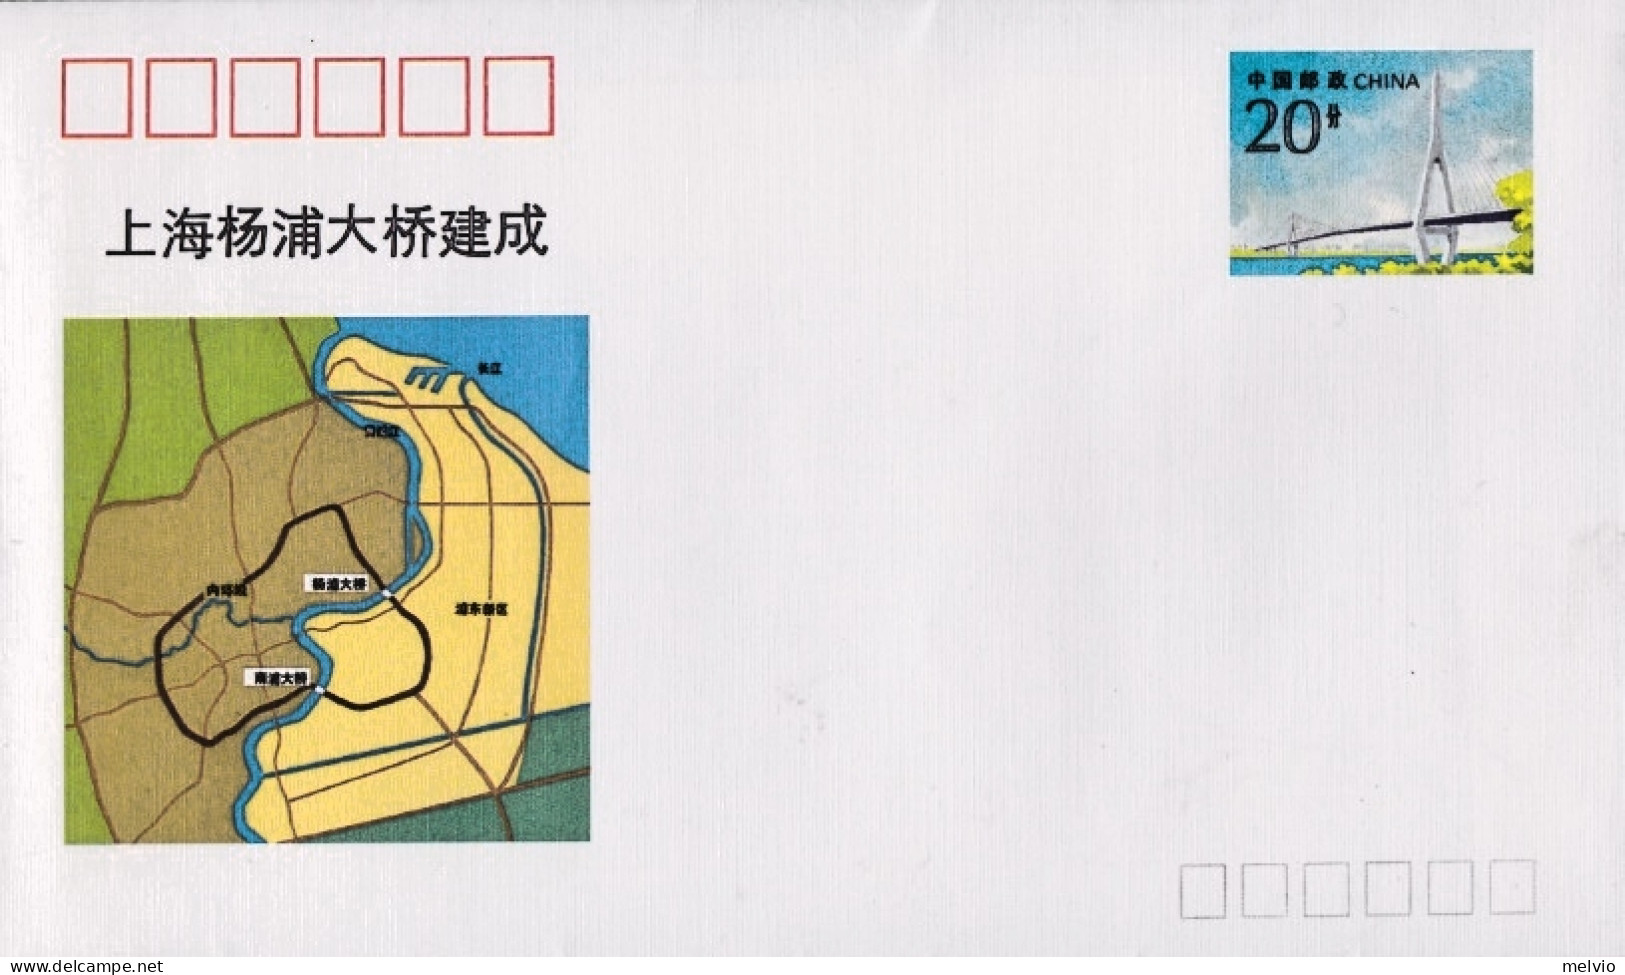 1993-Cina China JF40, Completion Of The Shanghai Yangpu Bridge - Briefe U. Dokumente